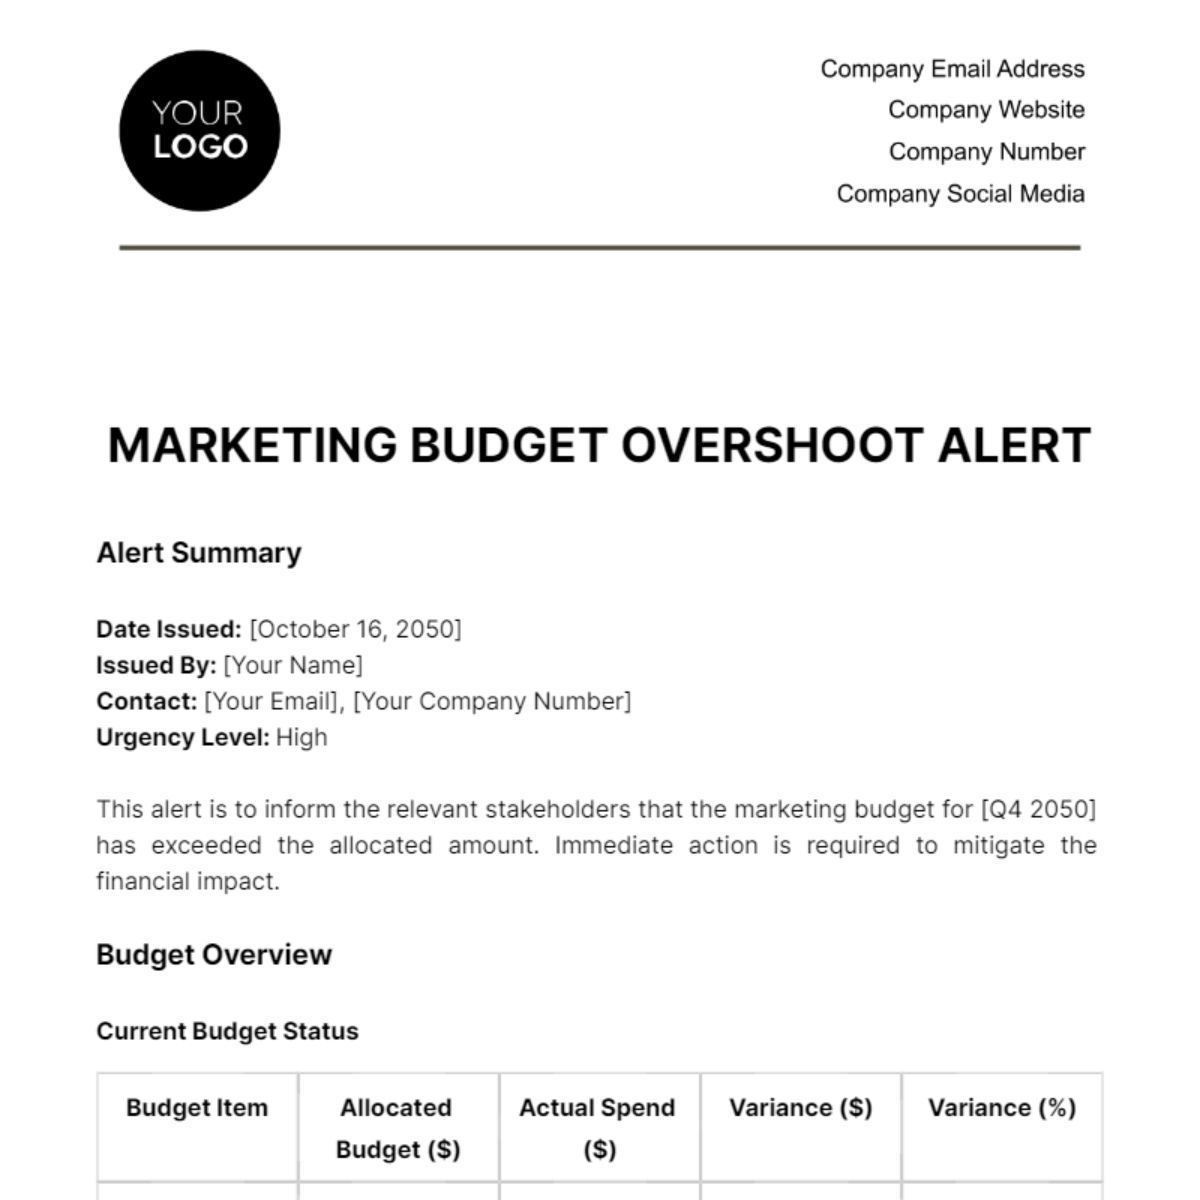 Free Marketing Budget Overshoot Alert Template